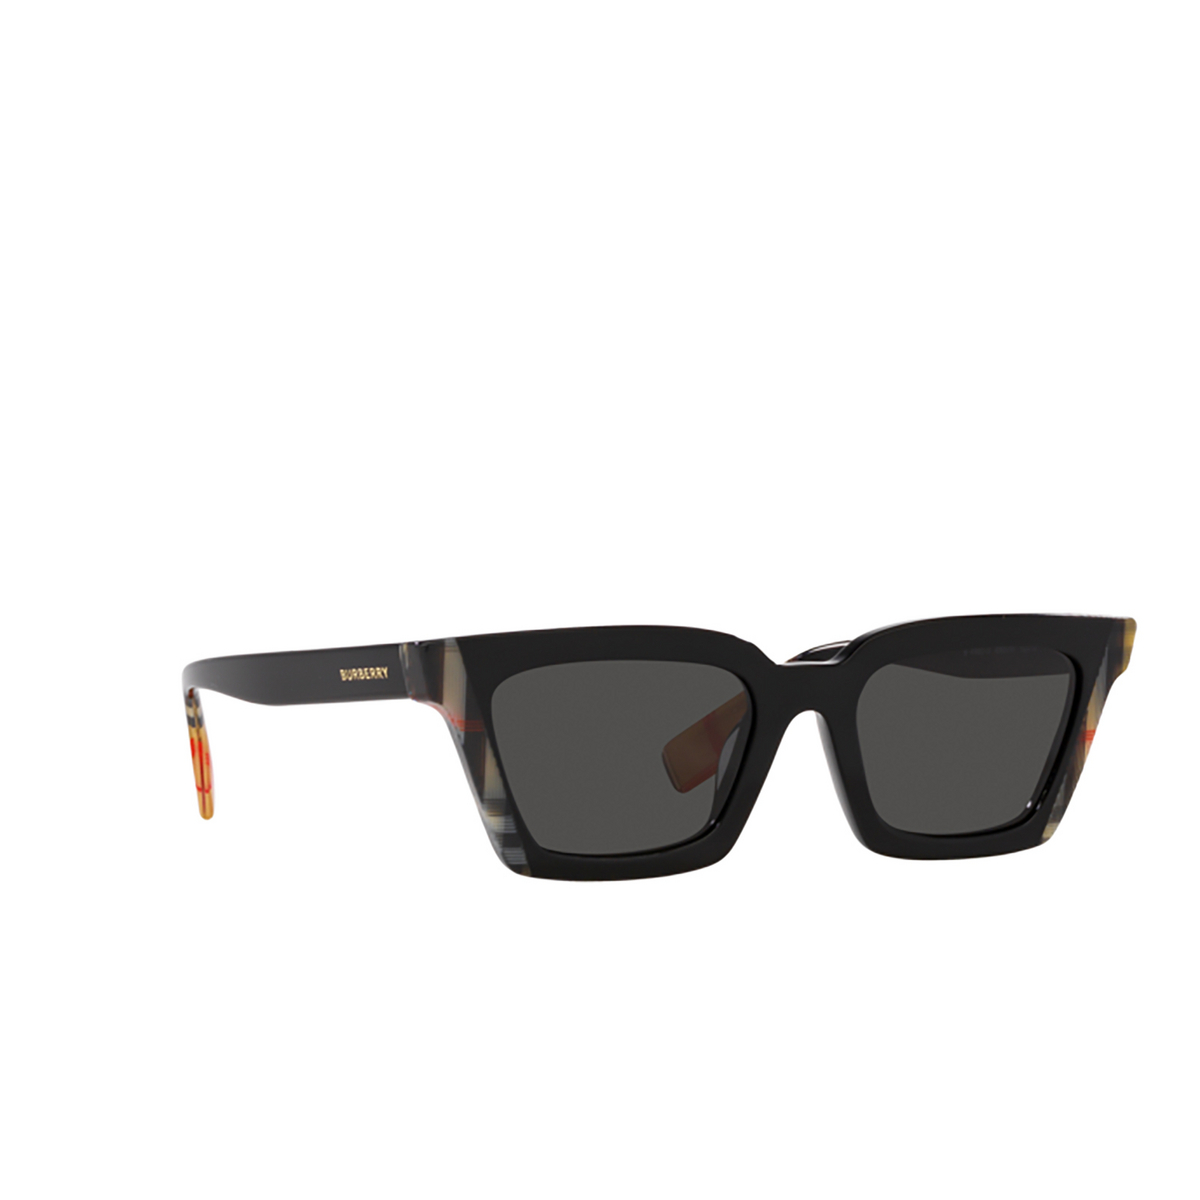 Burberry BRIAR Sunglasses 405587 Black / Vintage Check - three-quarters view